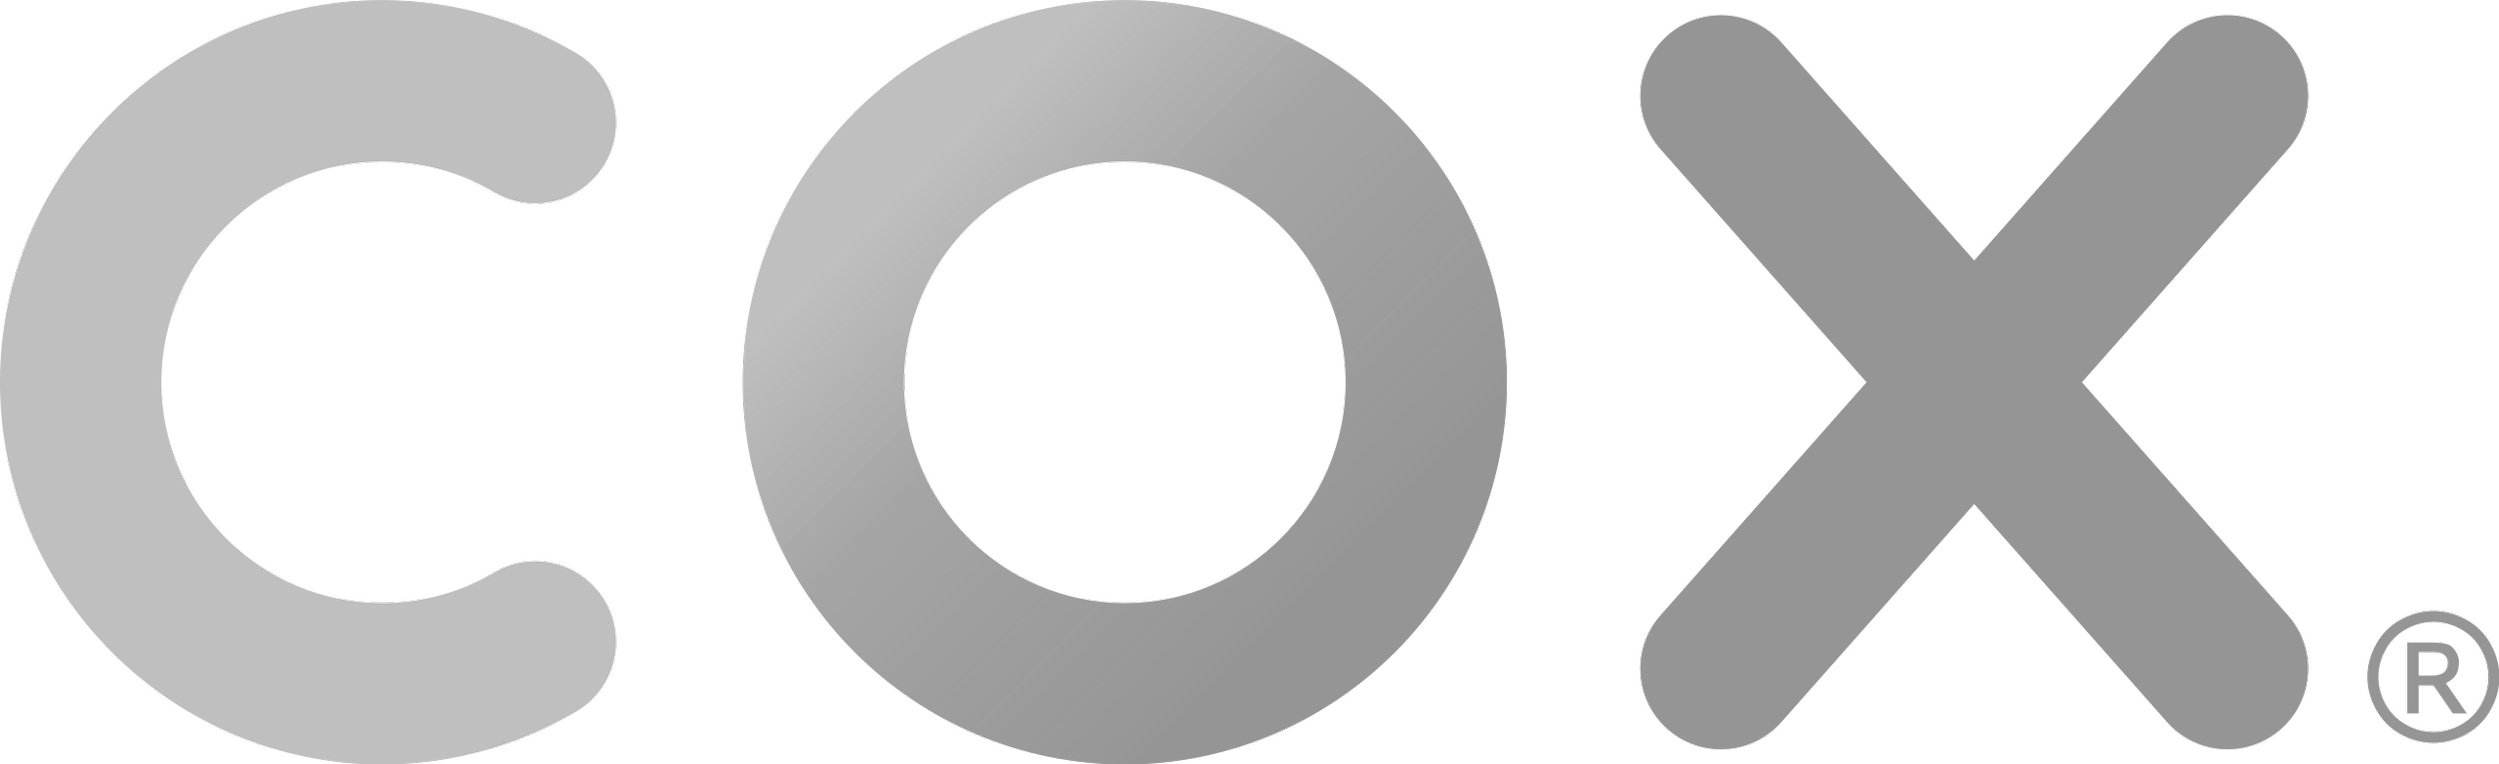 Cox_Communications_Logo.jpg